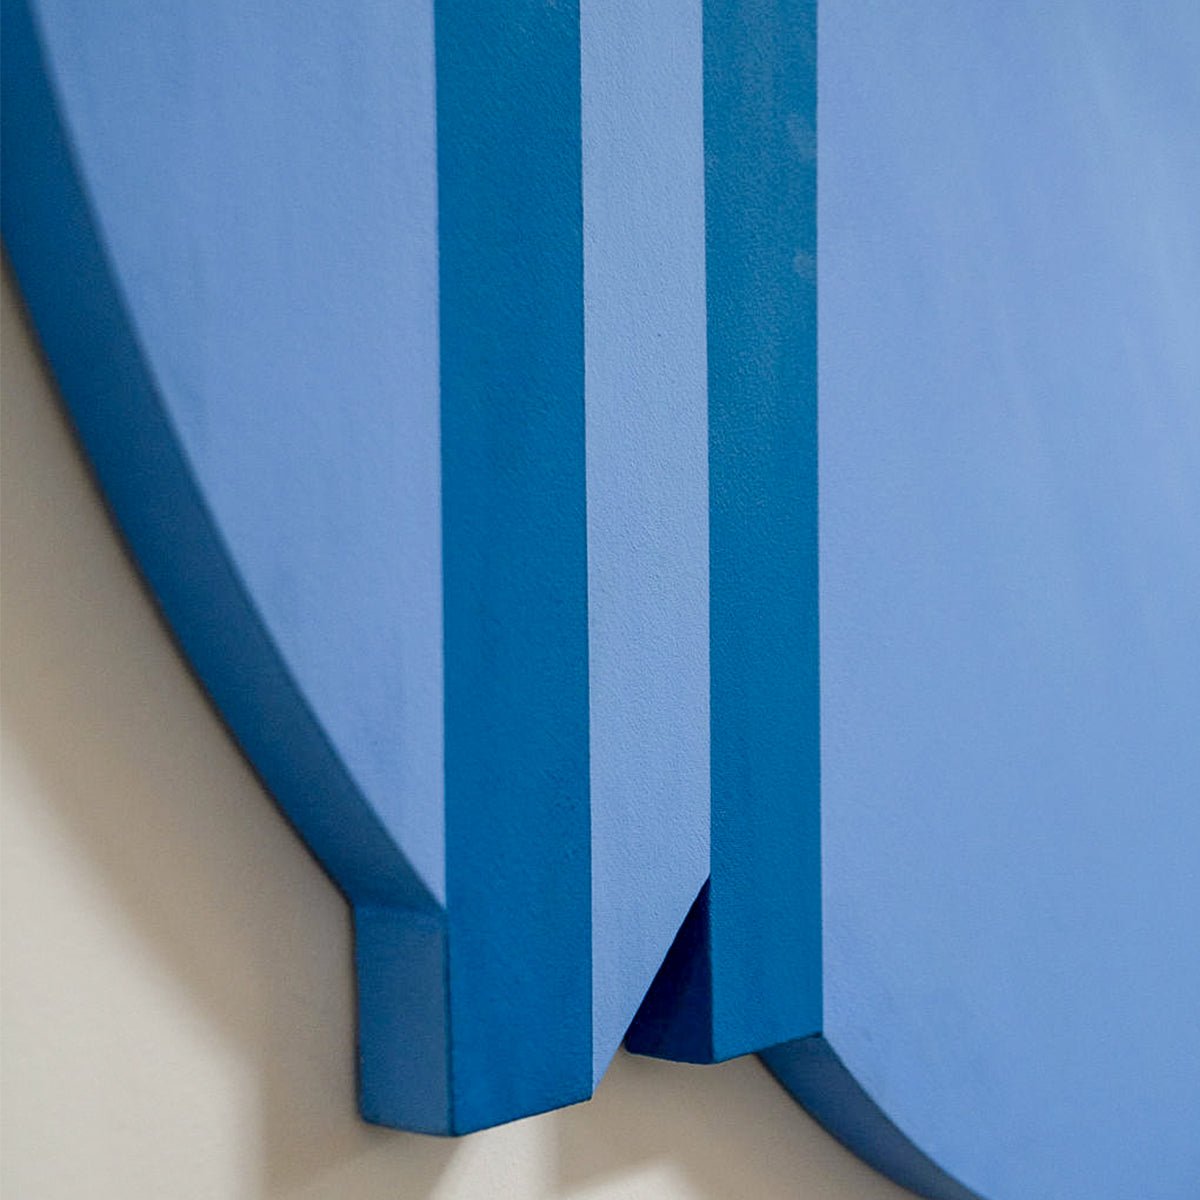 Closeup showing sharp edges mixed into the circular canvas.